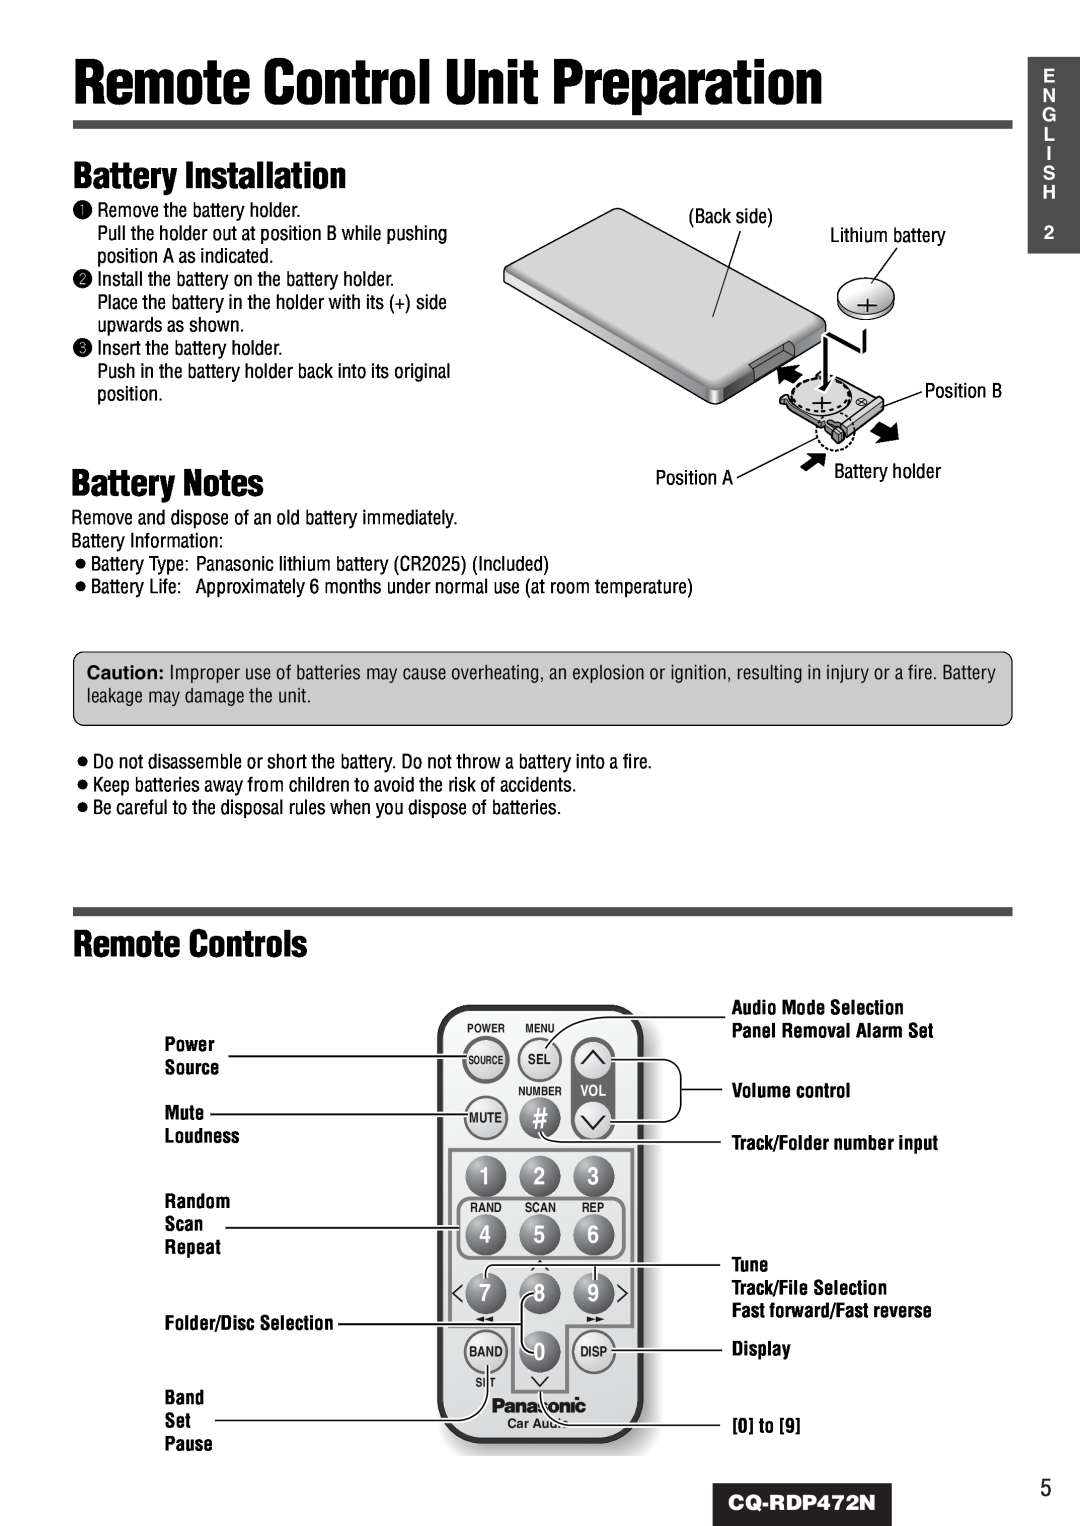 Panasonic CQ-RDP472N manual Remote Control Unit Preparation, Battery Installation, Battery Notes, Remote Controls 